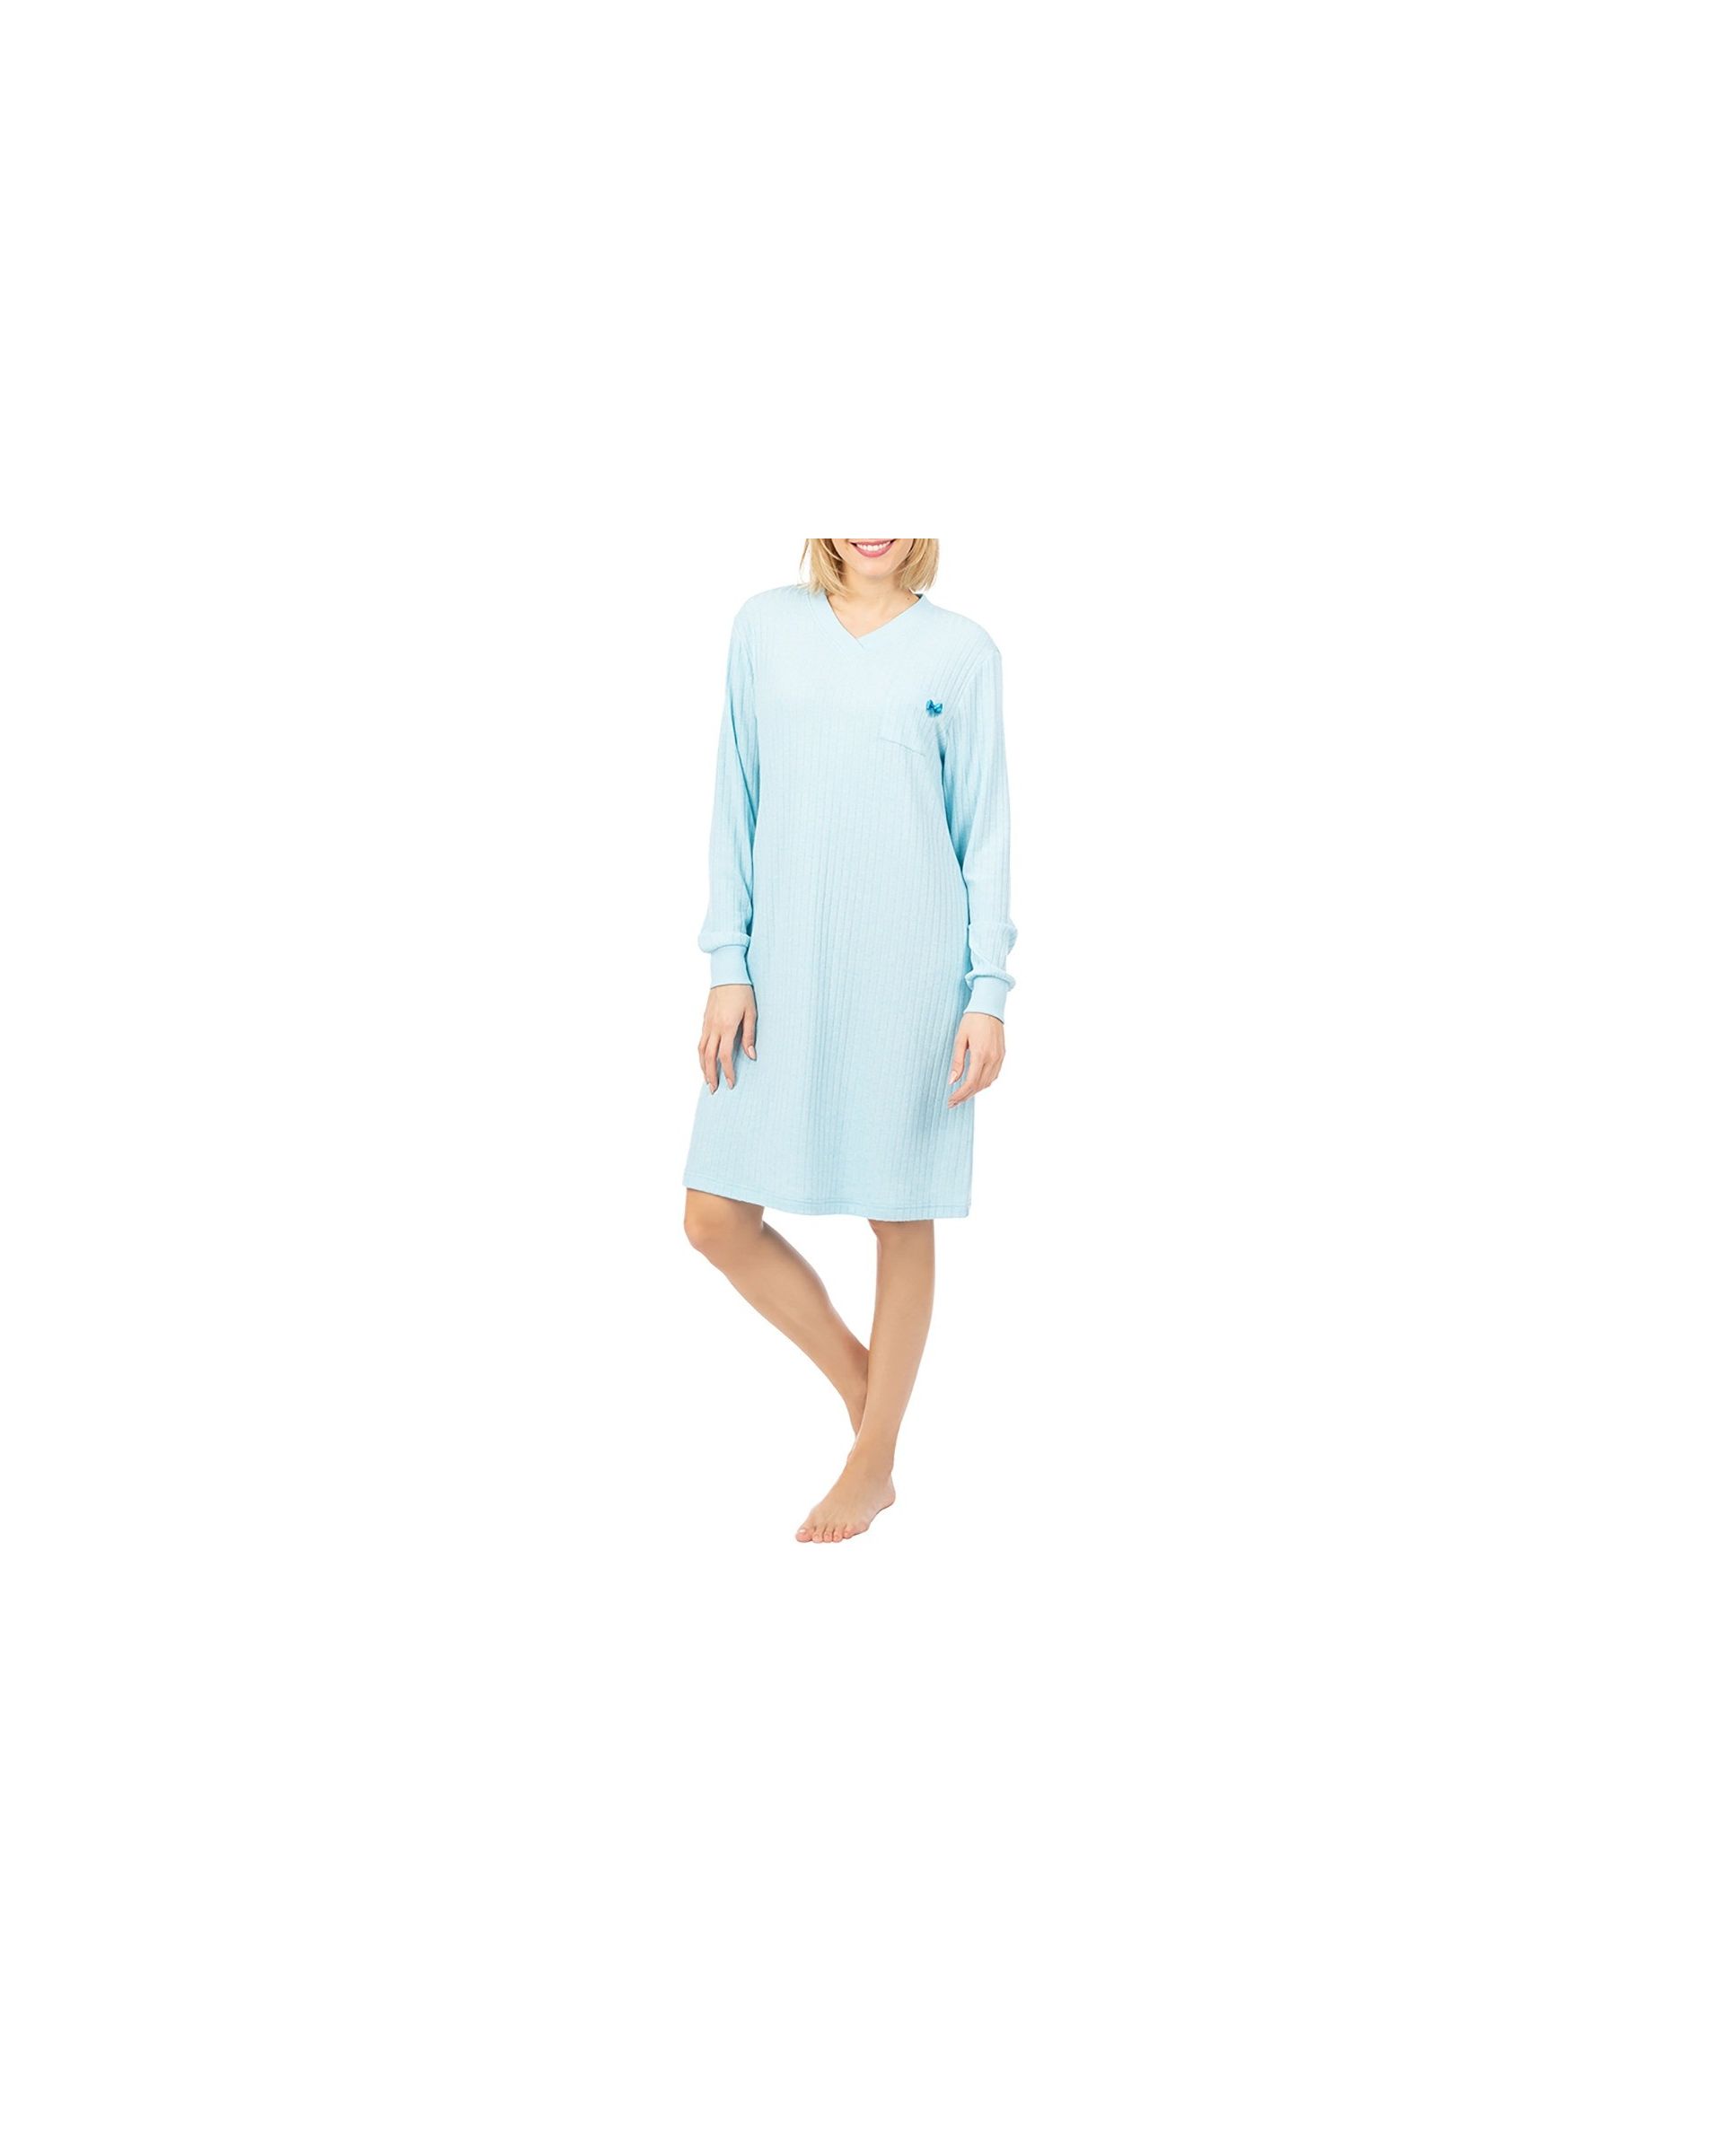 Women's short nightdress for winter in light blue ribbing